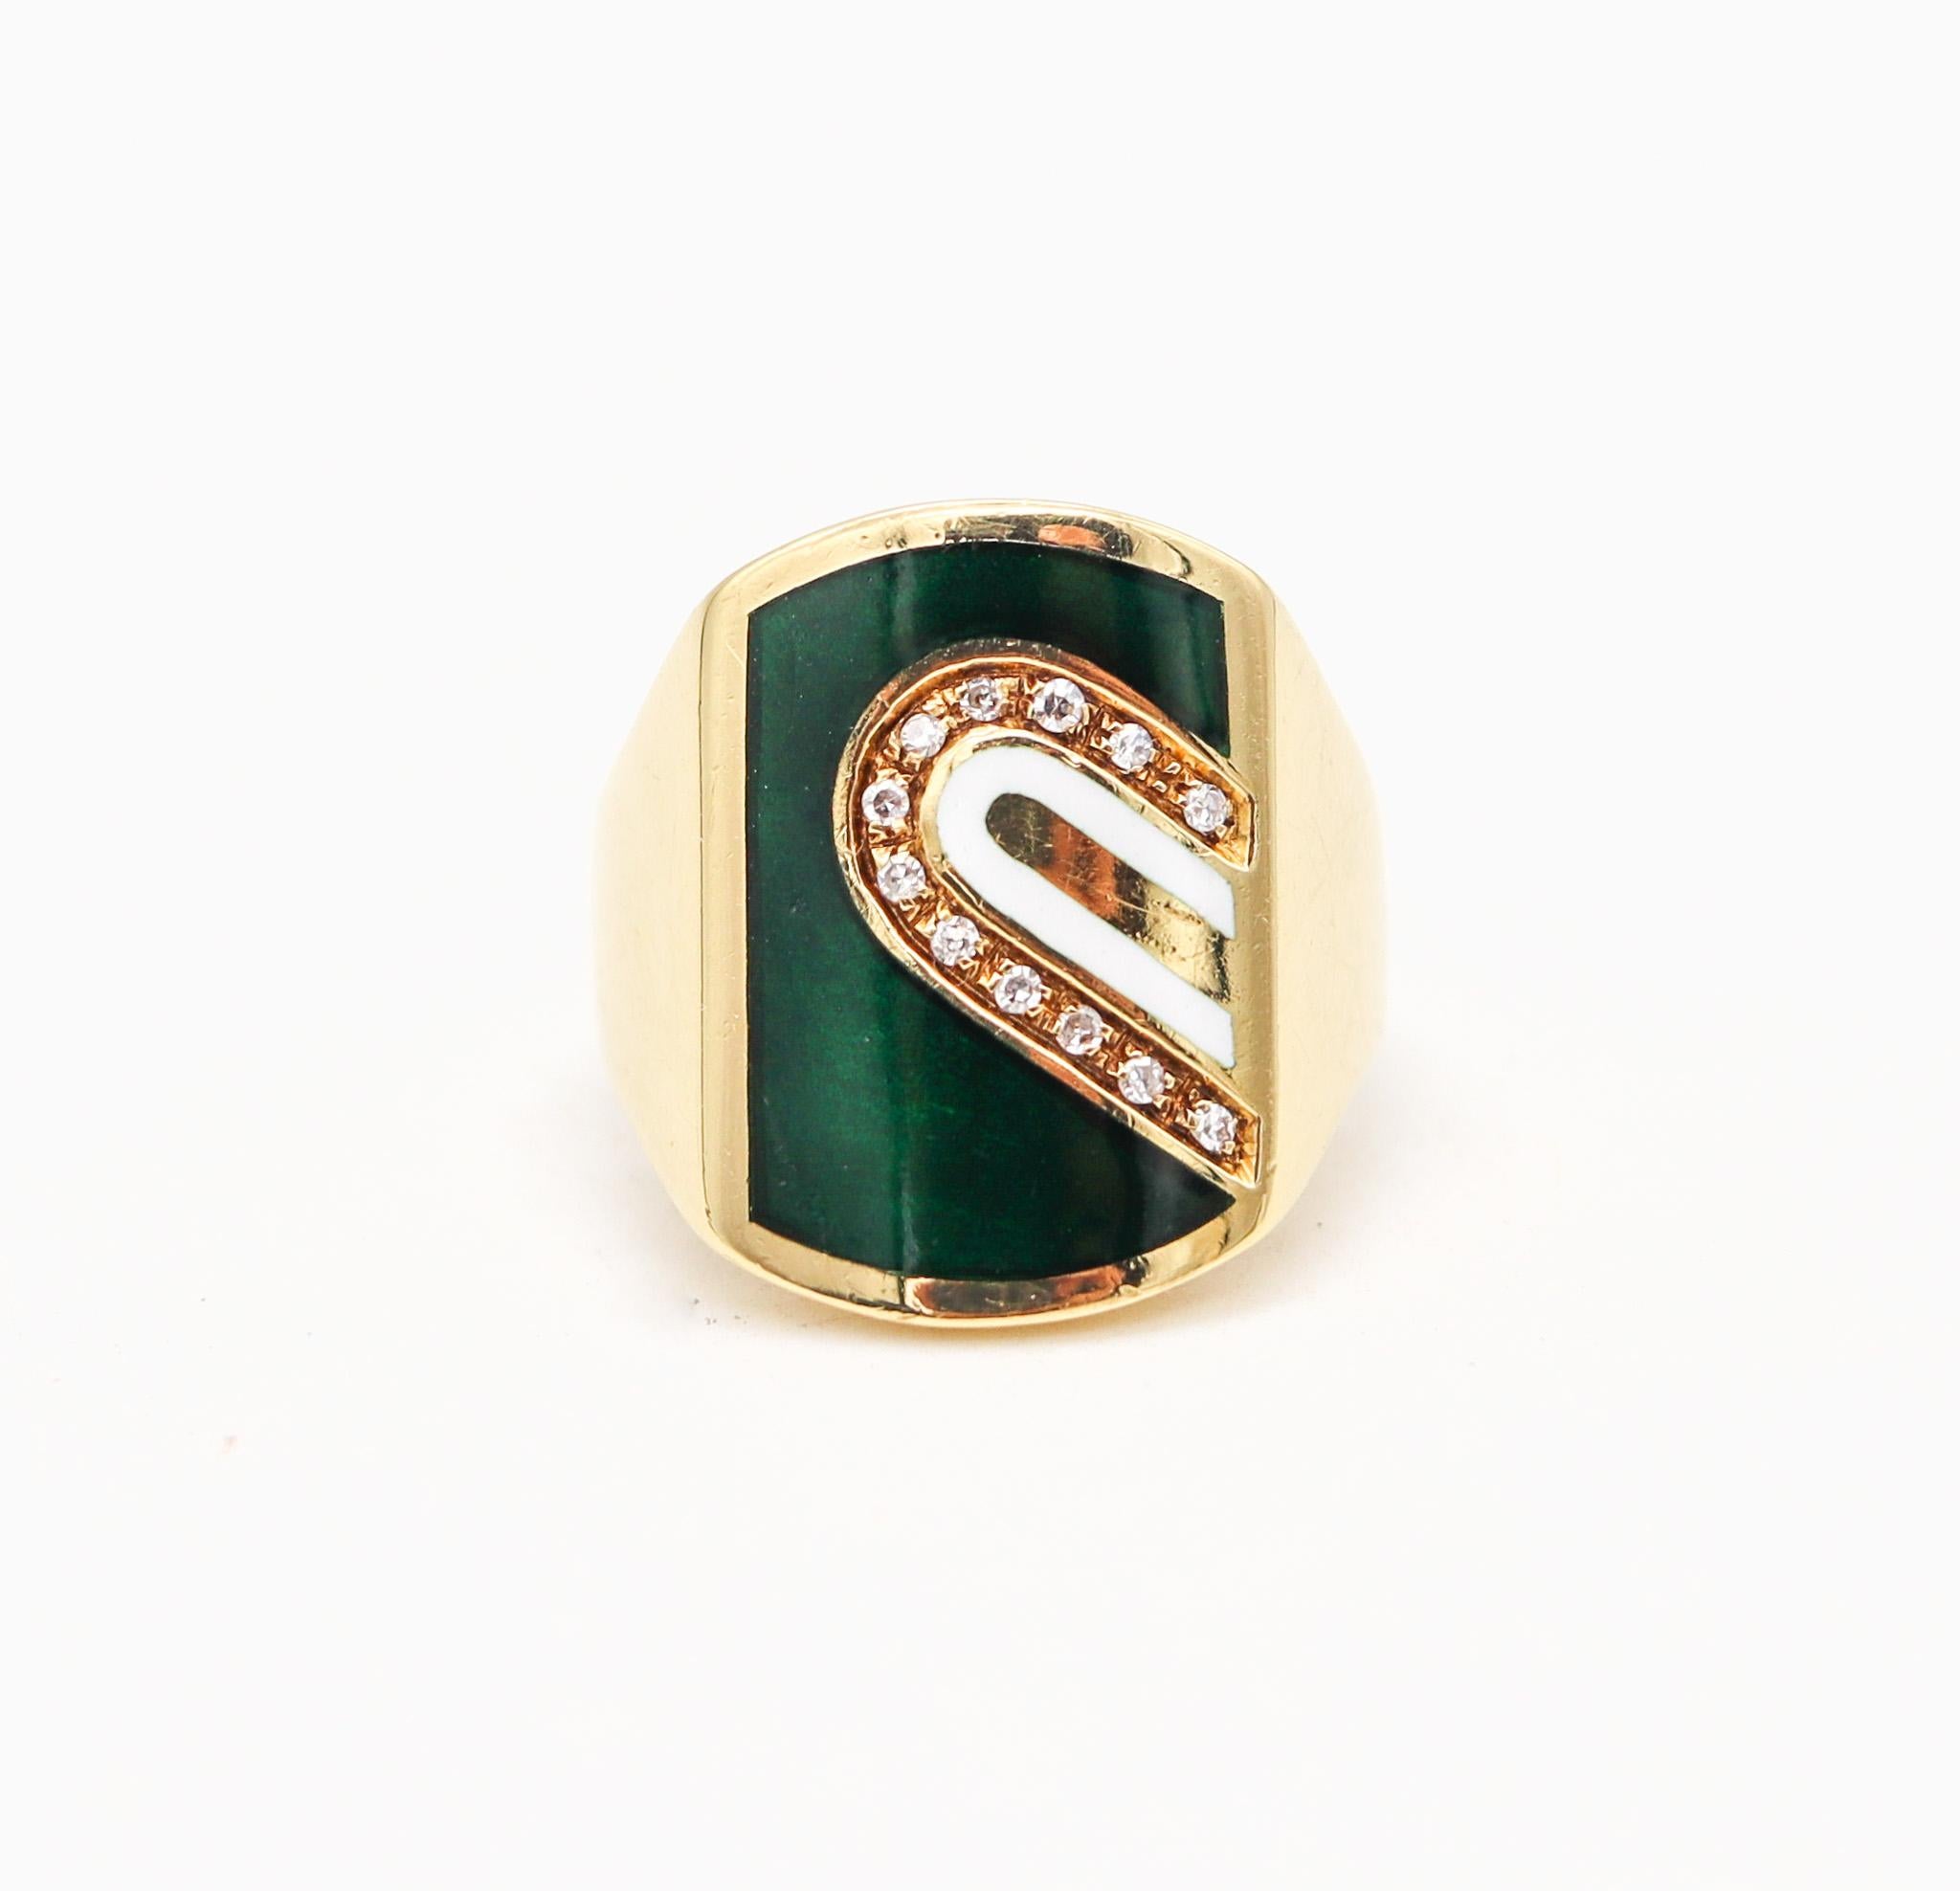 Cartier 1970 Modernist Enameled Signet Ring in 18 Karat Gold with Diamonds 2